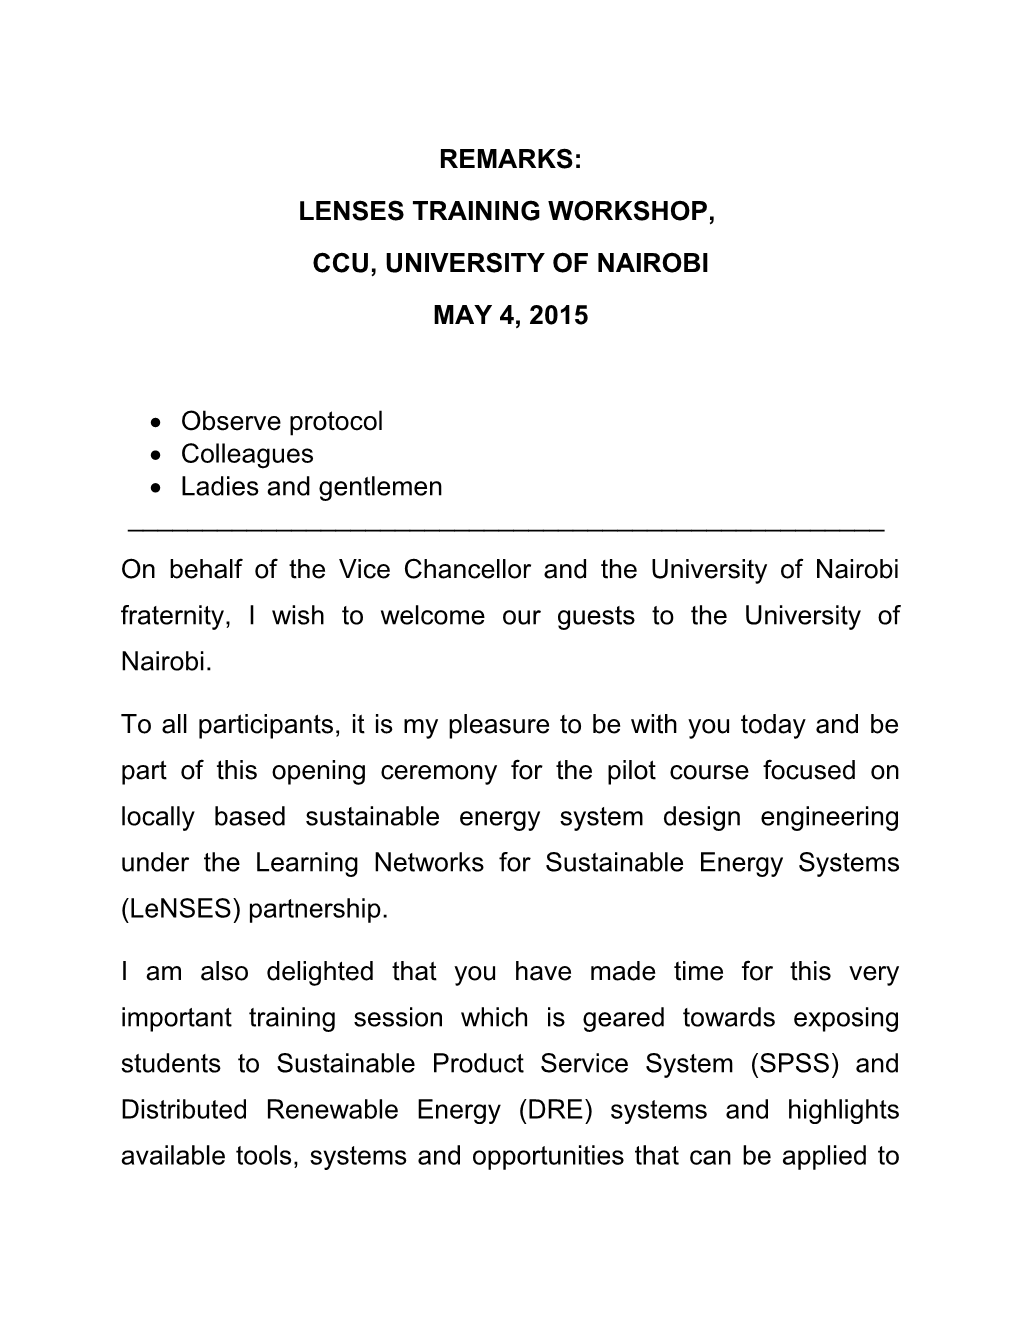 Lenses Training Workshop